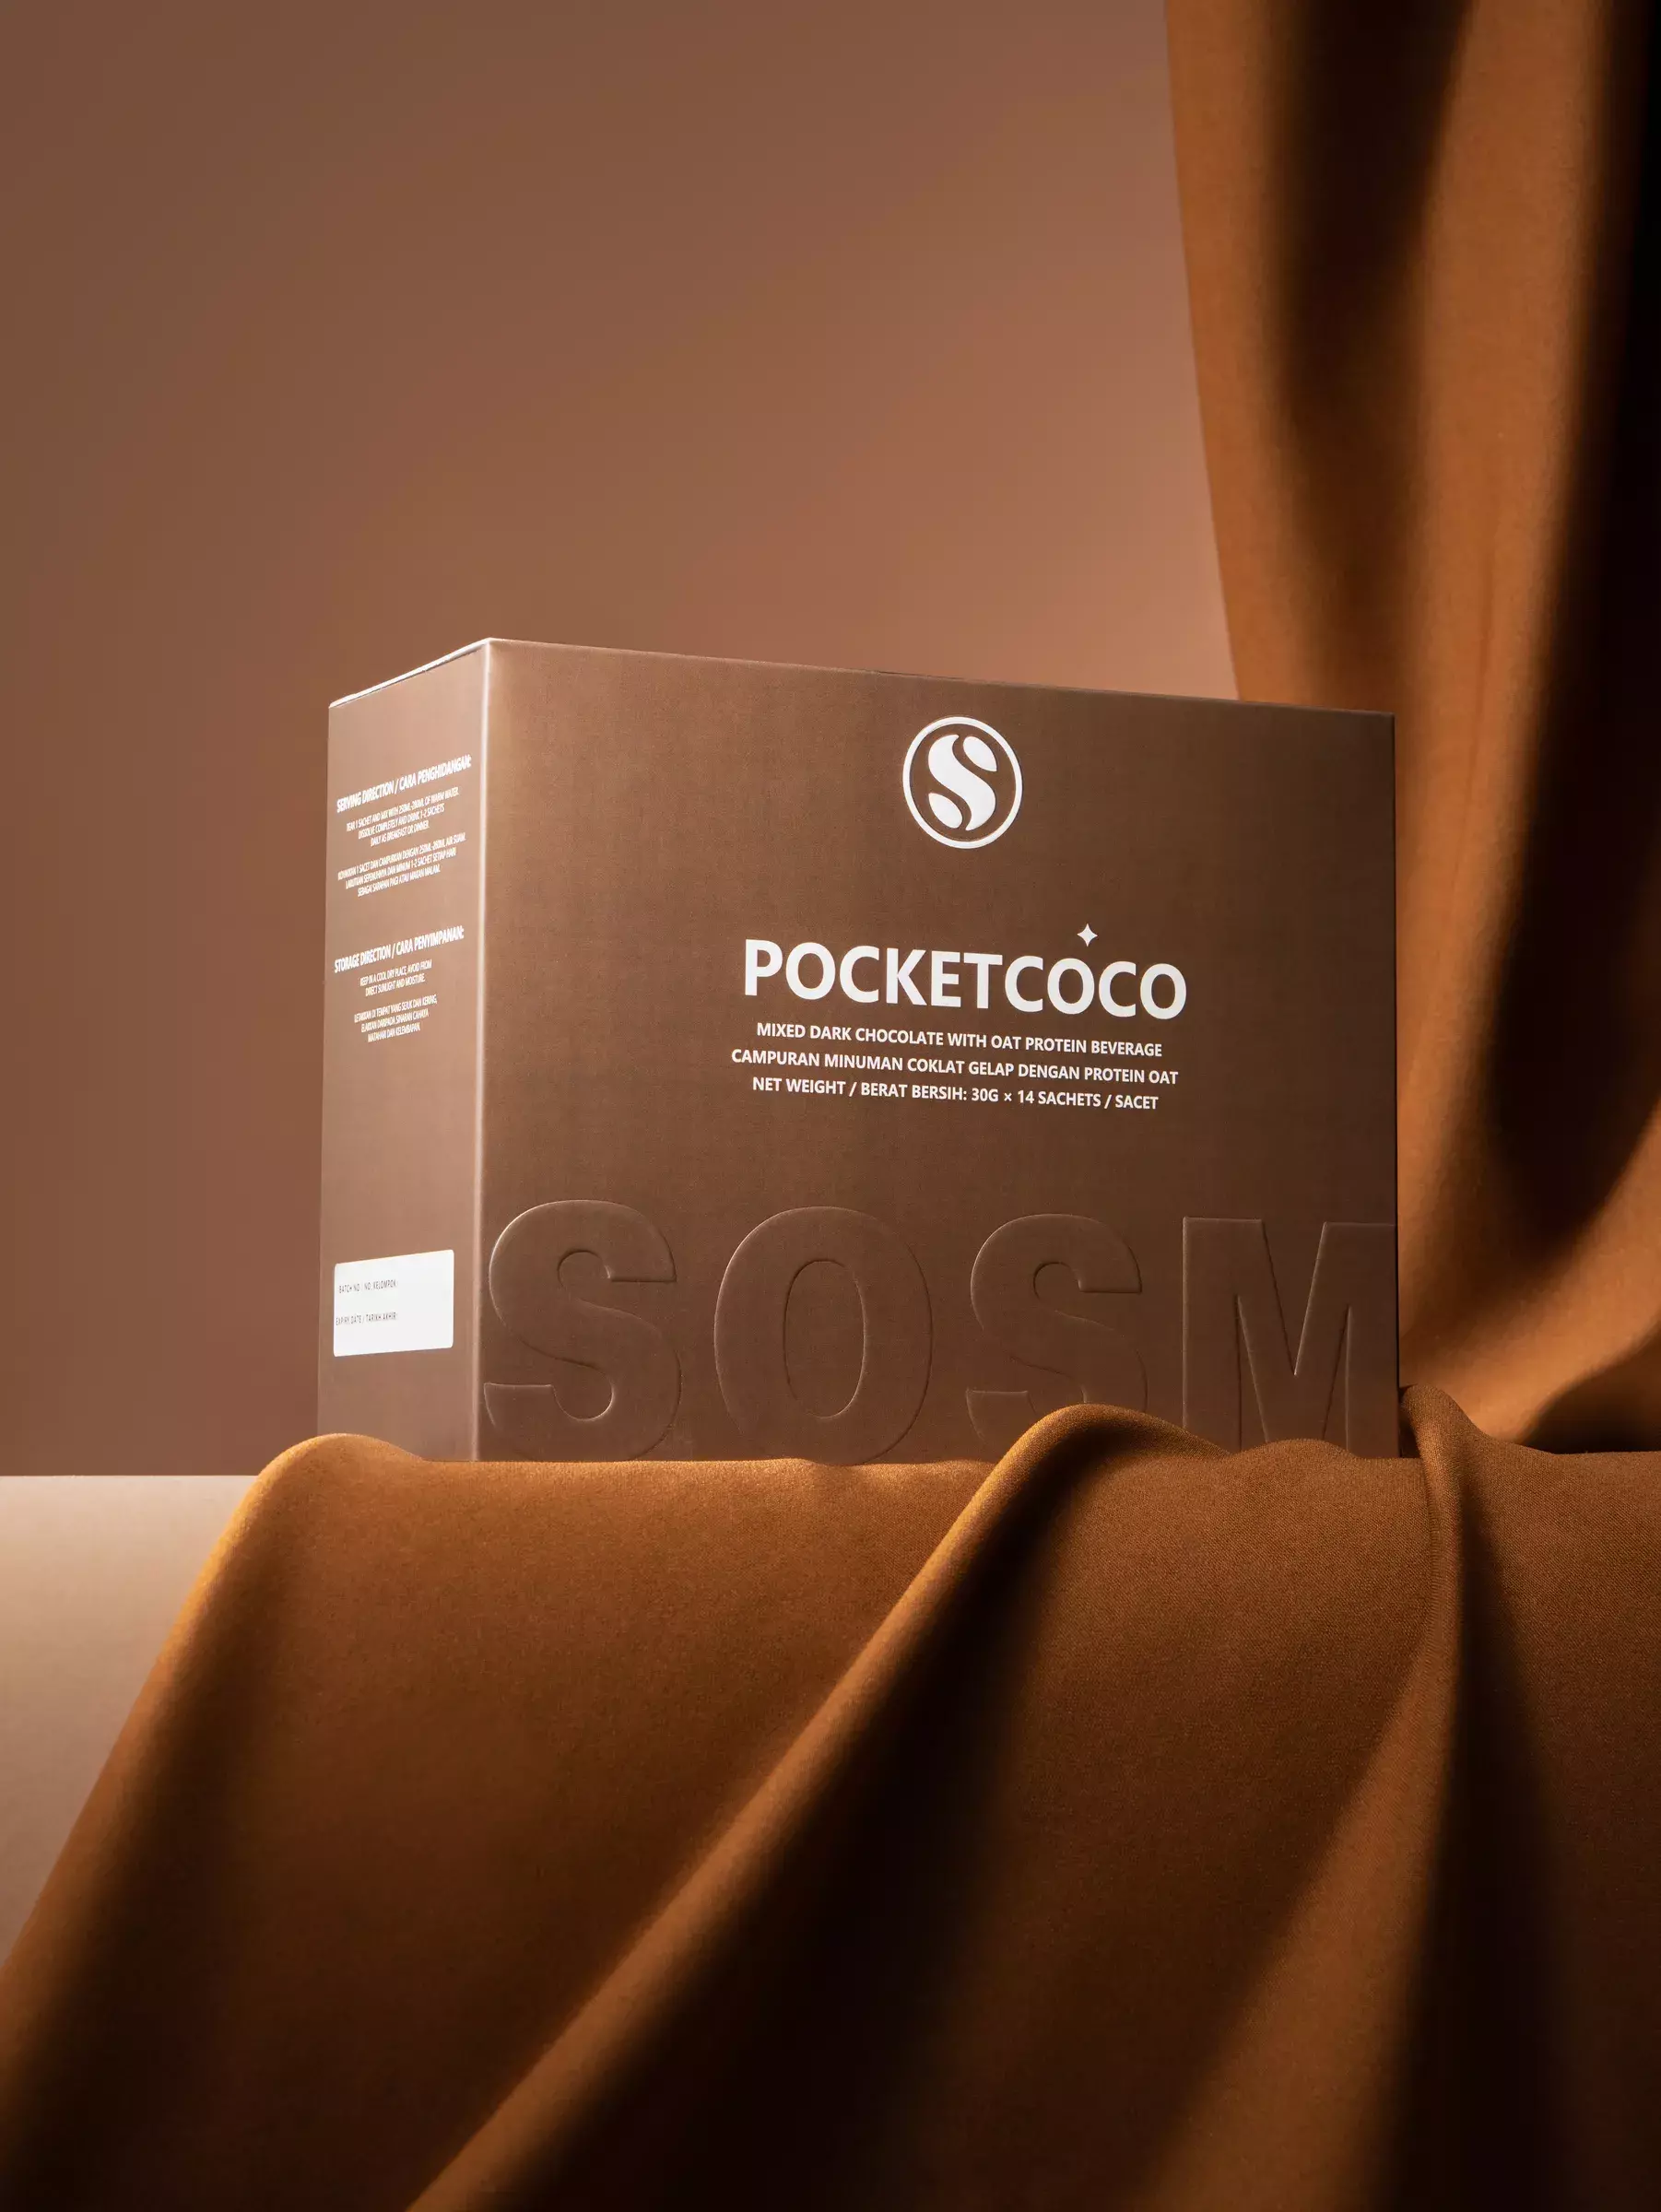 Pocket Coco 代餐, By SOM1 – SOM1 EAGLE TEAM